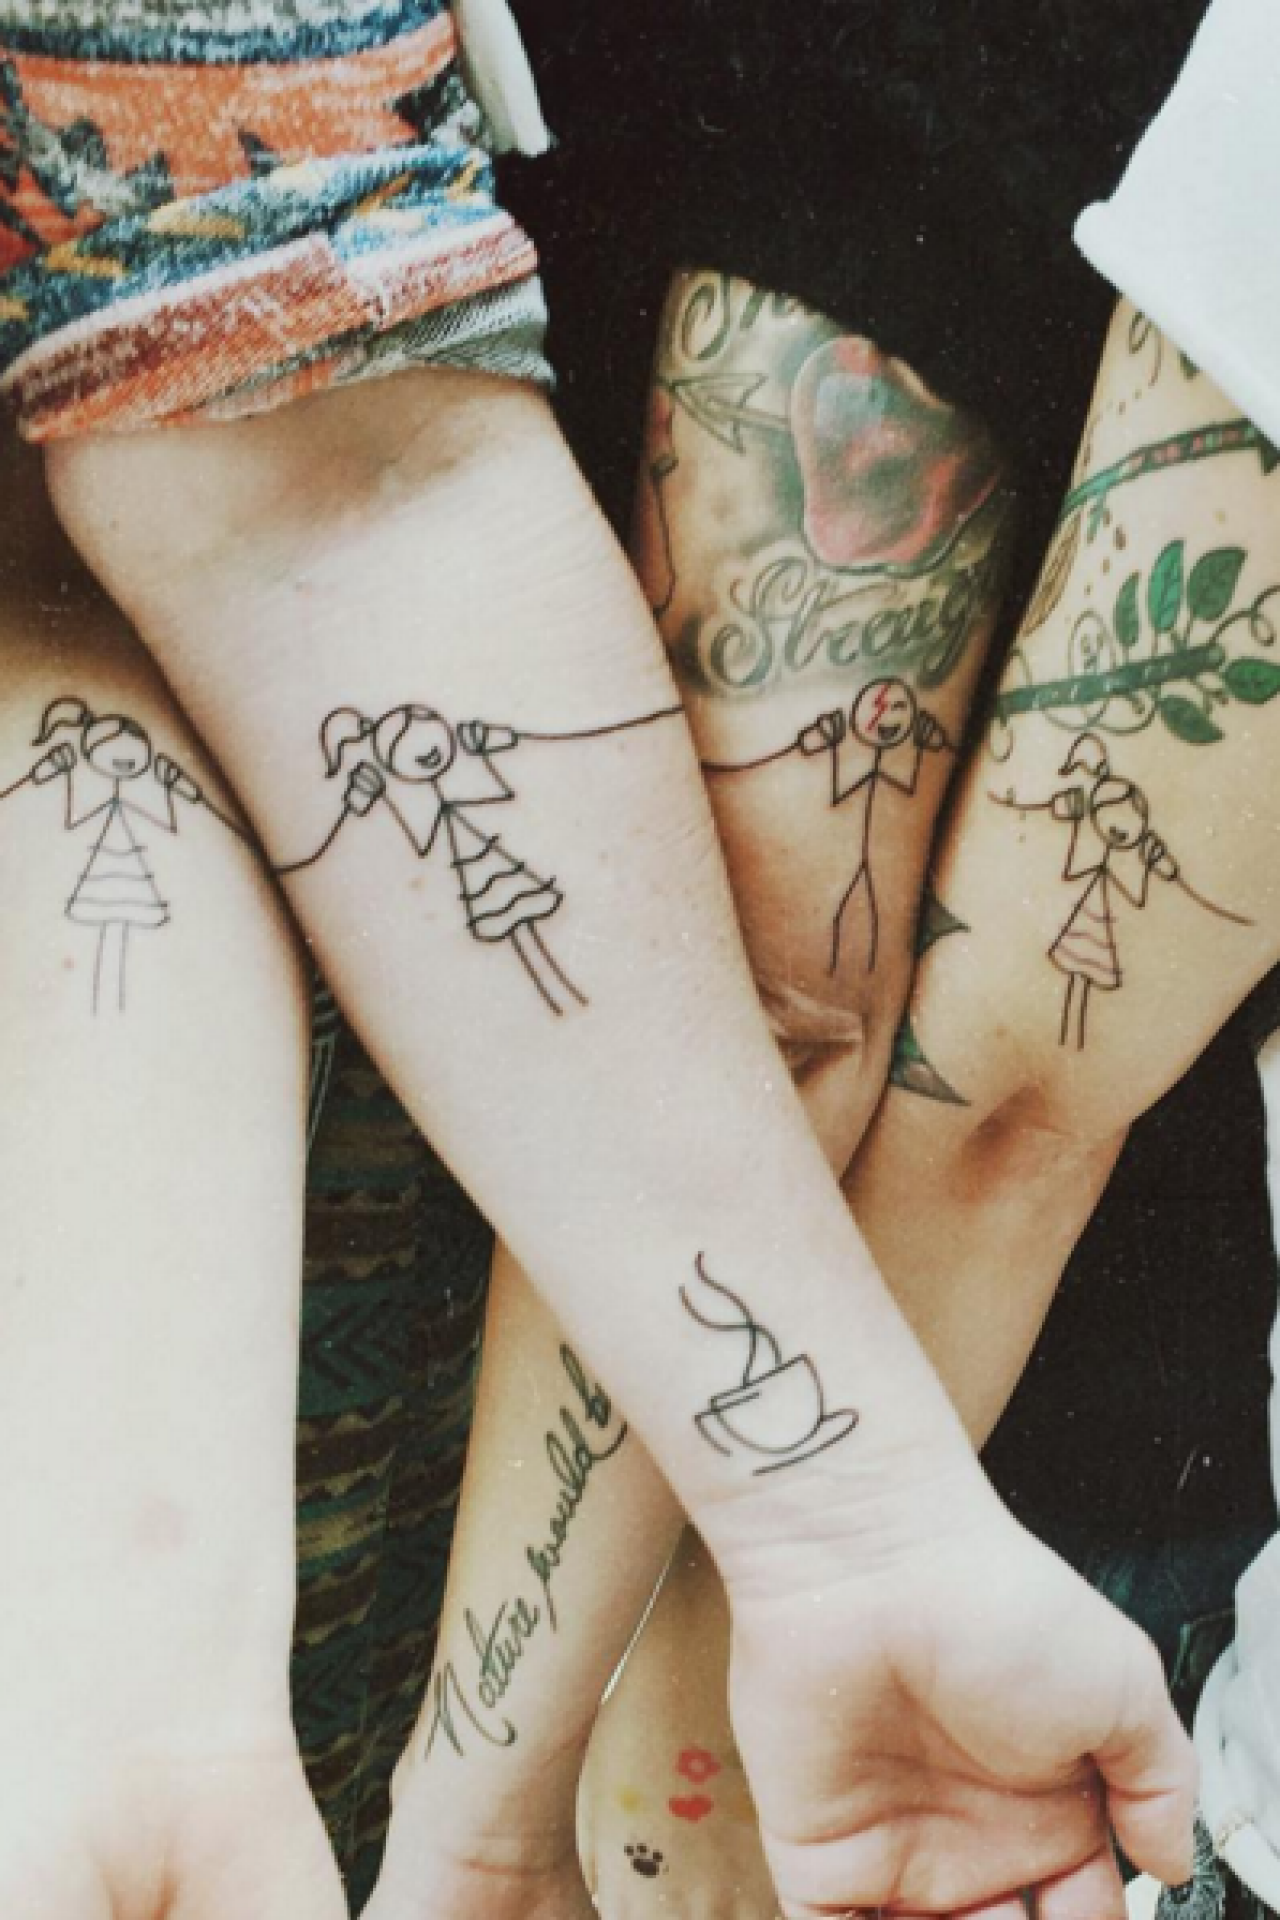 Friendship Tattoos to Celebrate Galantine's Day